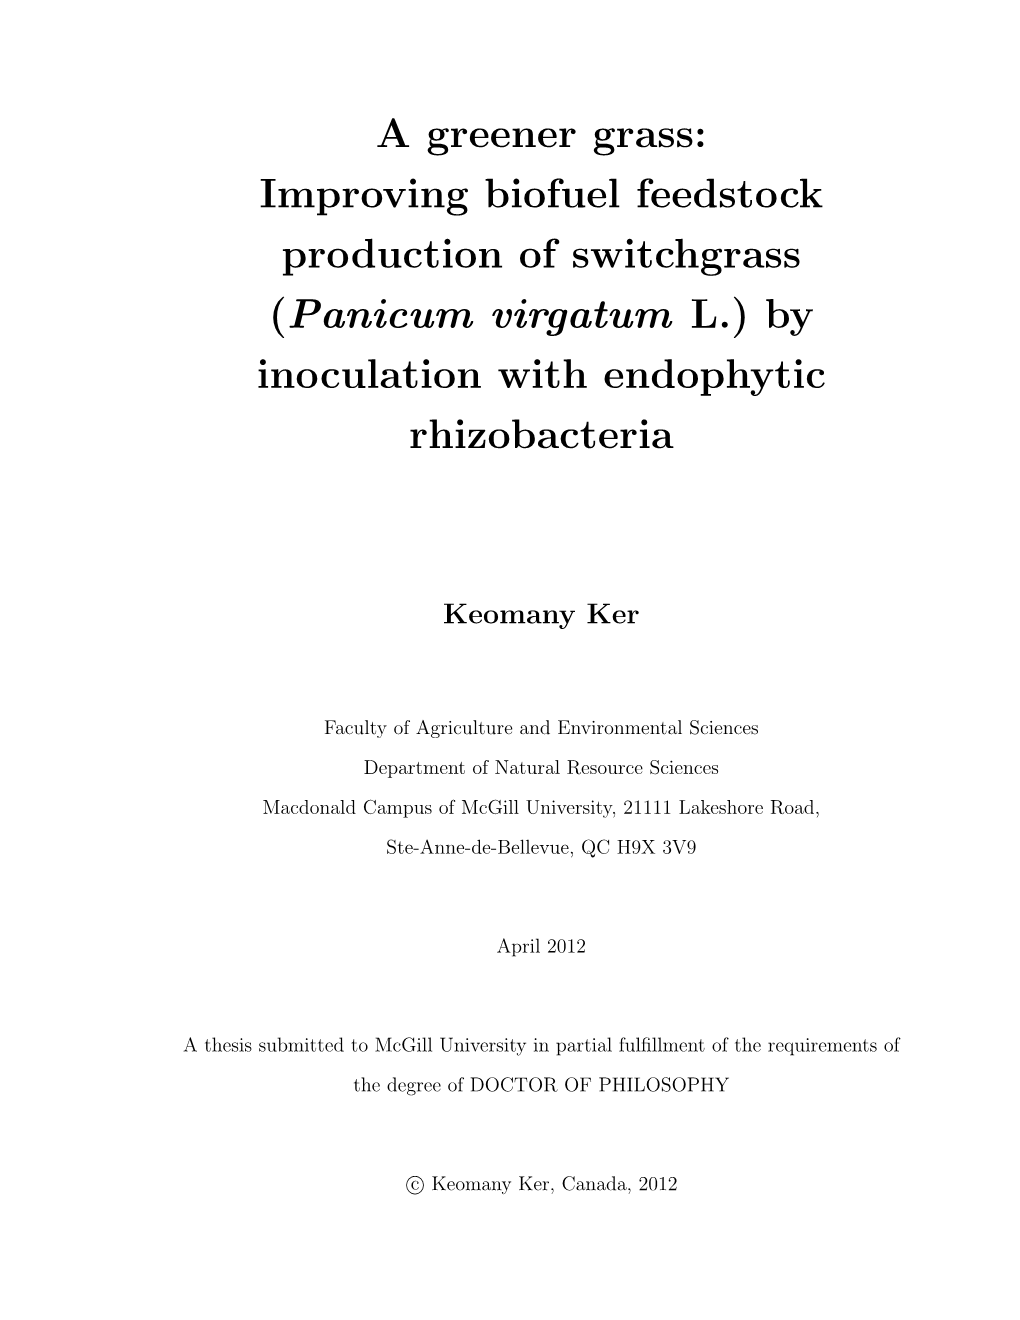 Improving Biofuel Feedstock Production of Switchgrass (Panicum Virgatum L.) by Inoculation with Endophytic Rhizobacteria